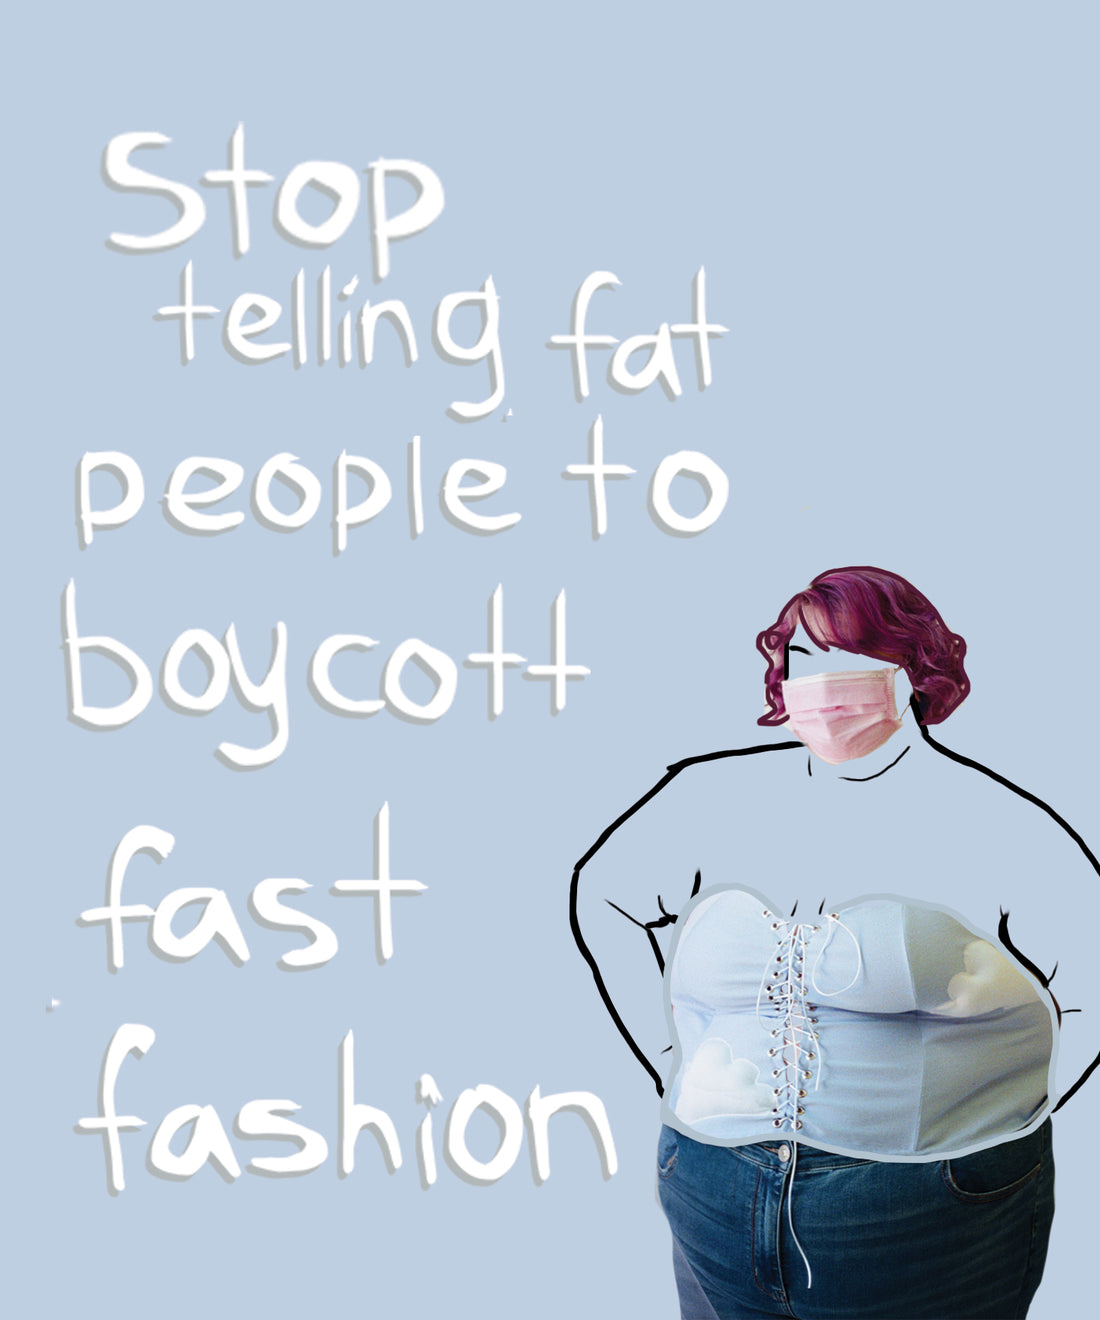 Stop Telling Fat People to Boycott Fast Fashion